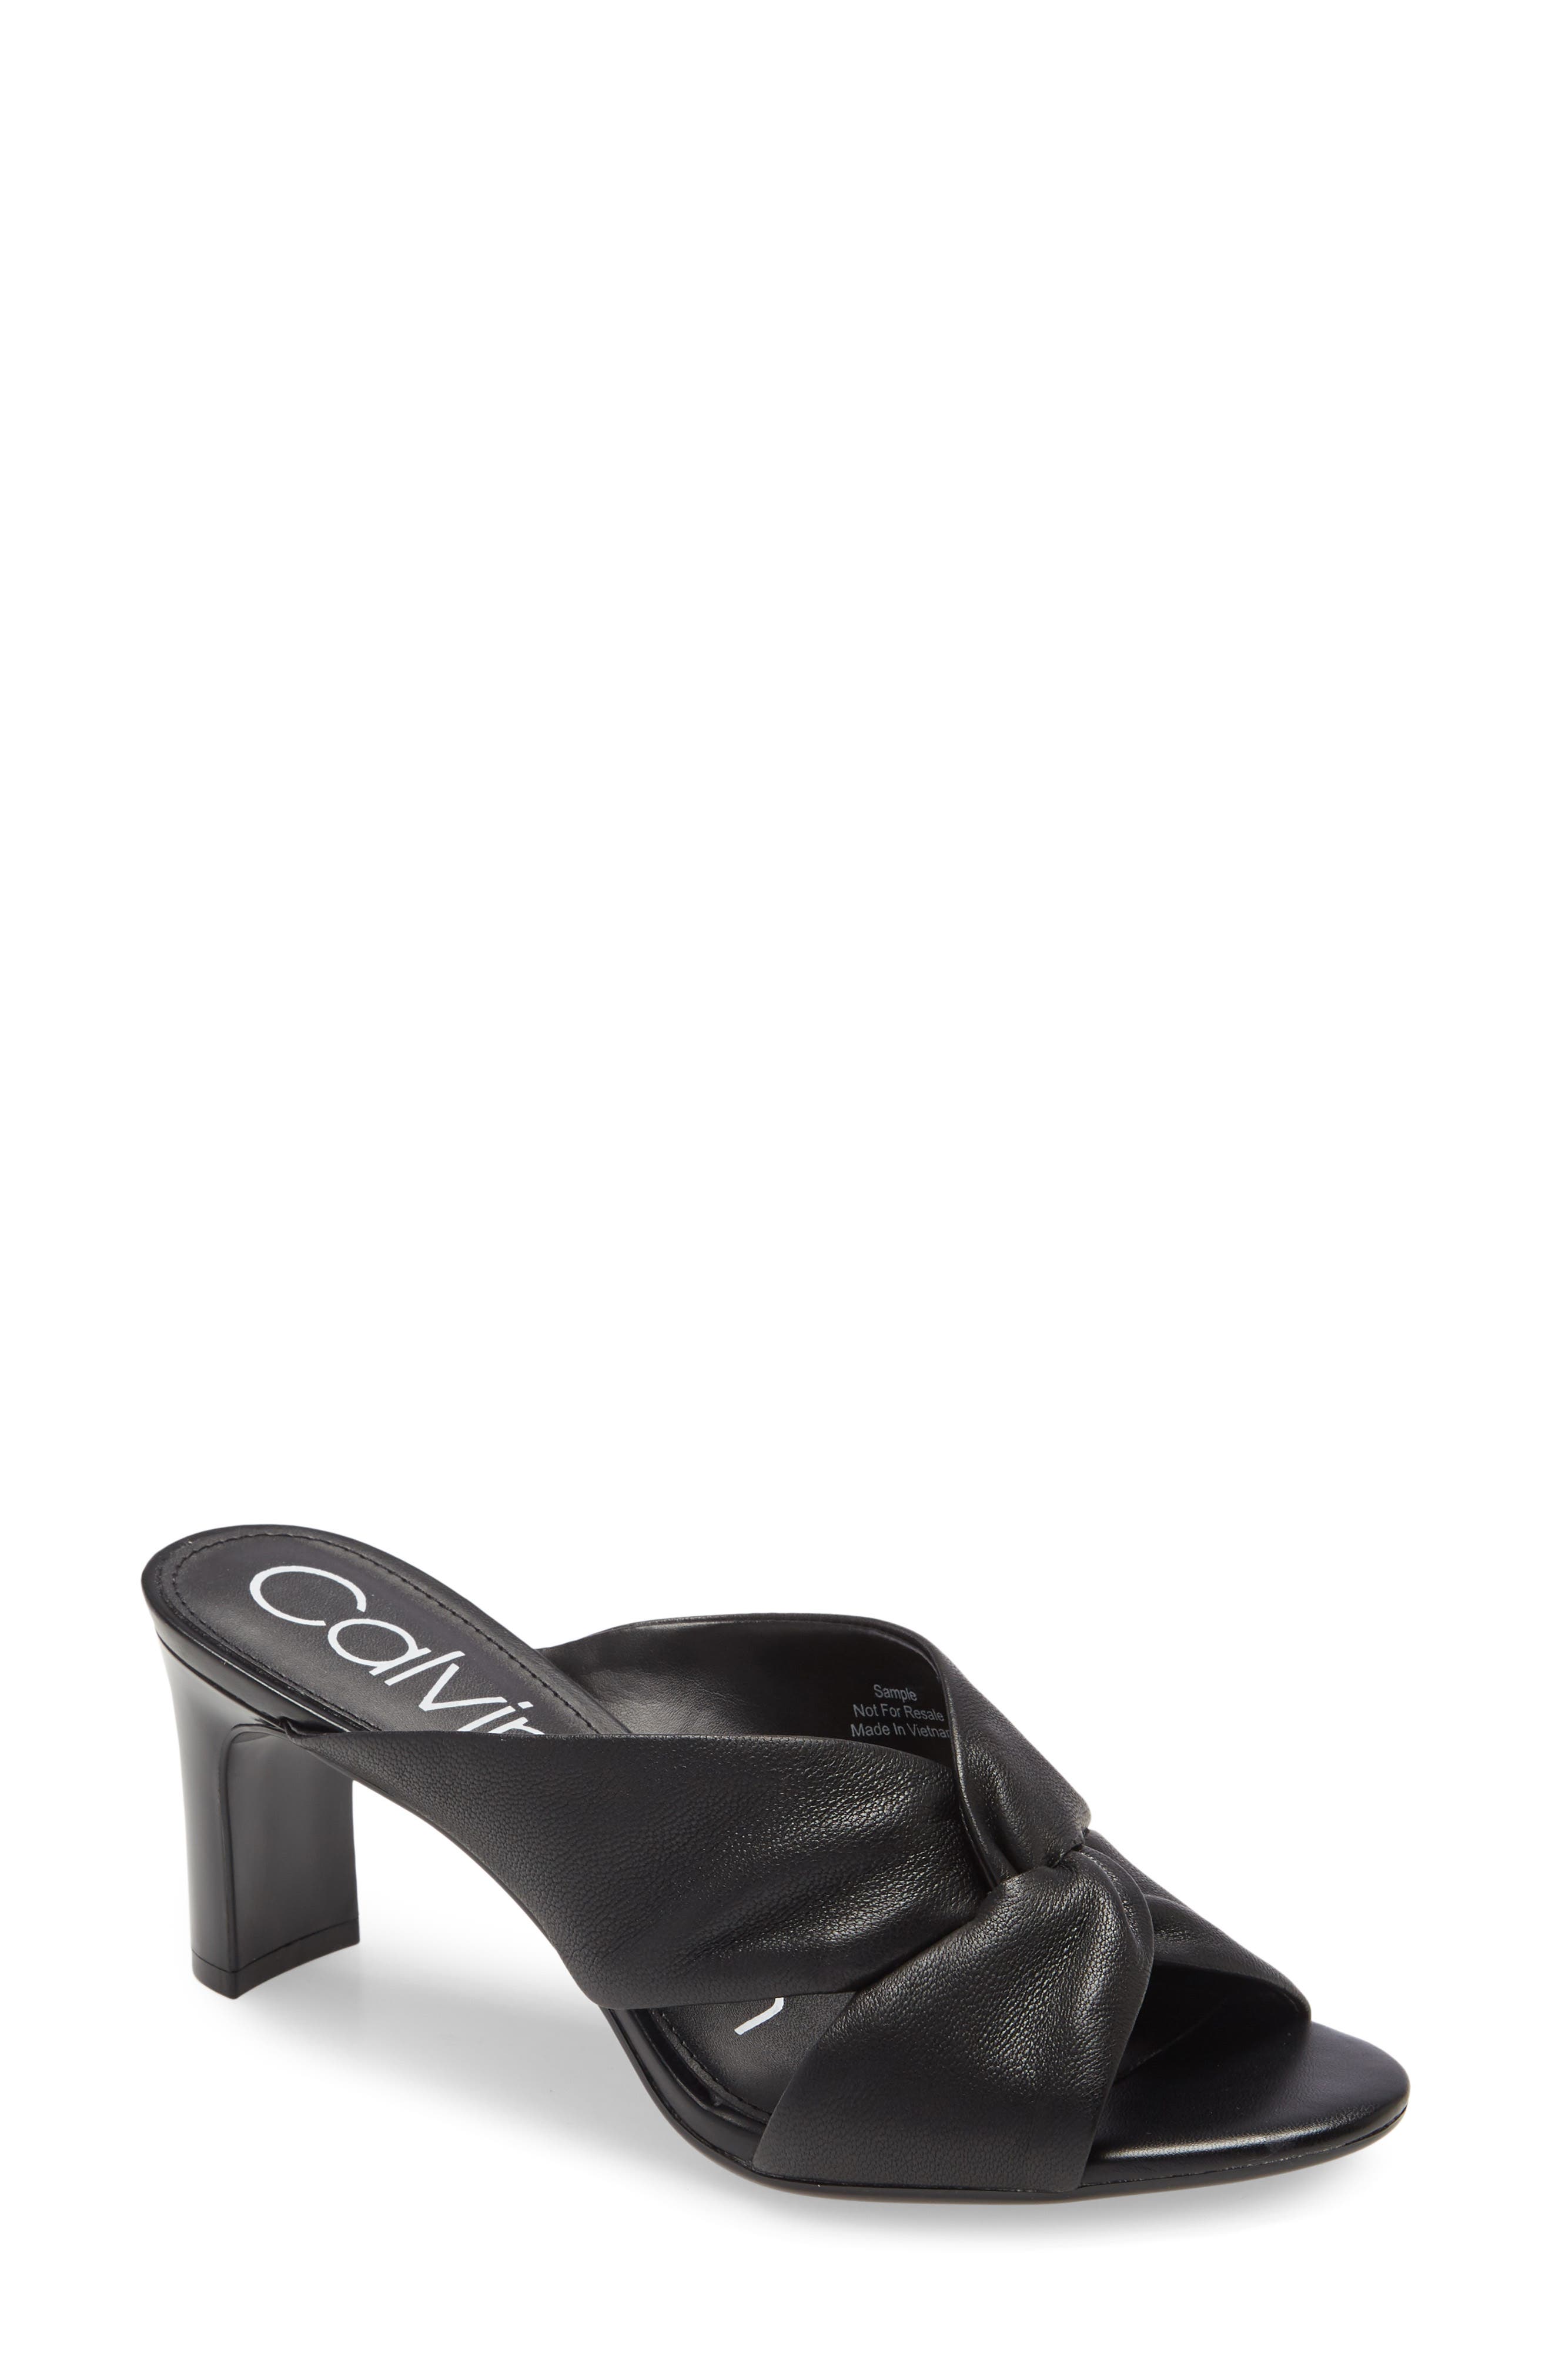 UPC 194060410531 product image for Women's Calvin Klein Omarion Sandal, Size 6.5 M - Black | upcitemdb.com